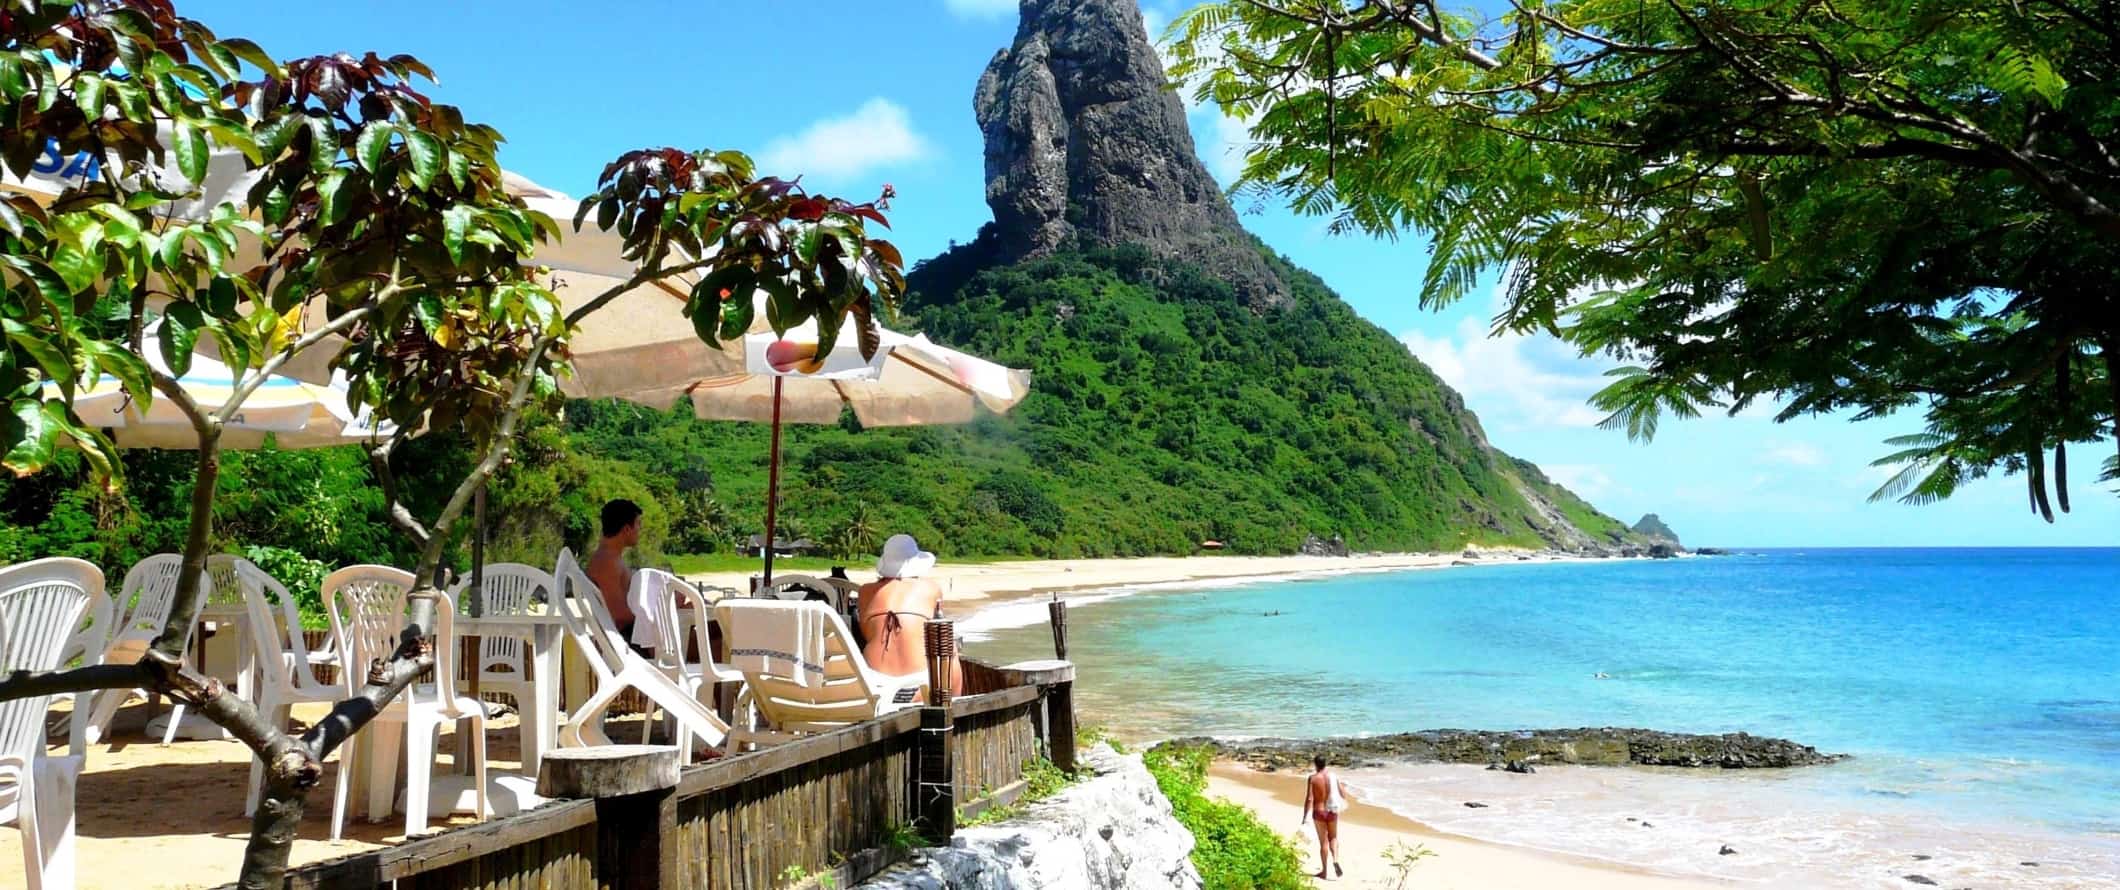 People sitting at a beachside cafe in Fernando de Noronha, Brazil